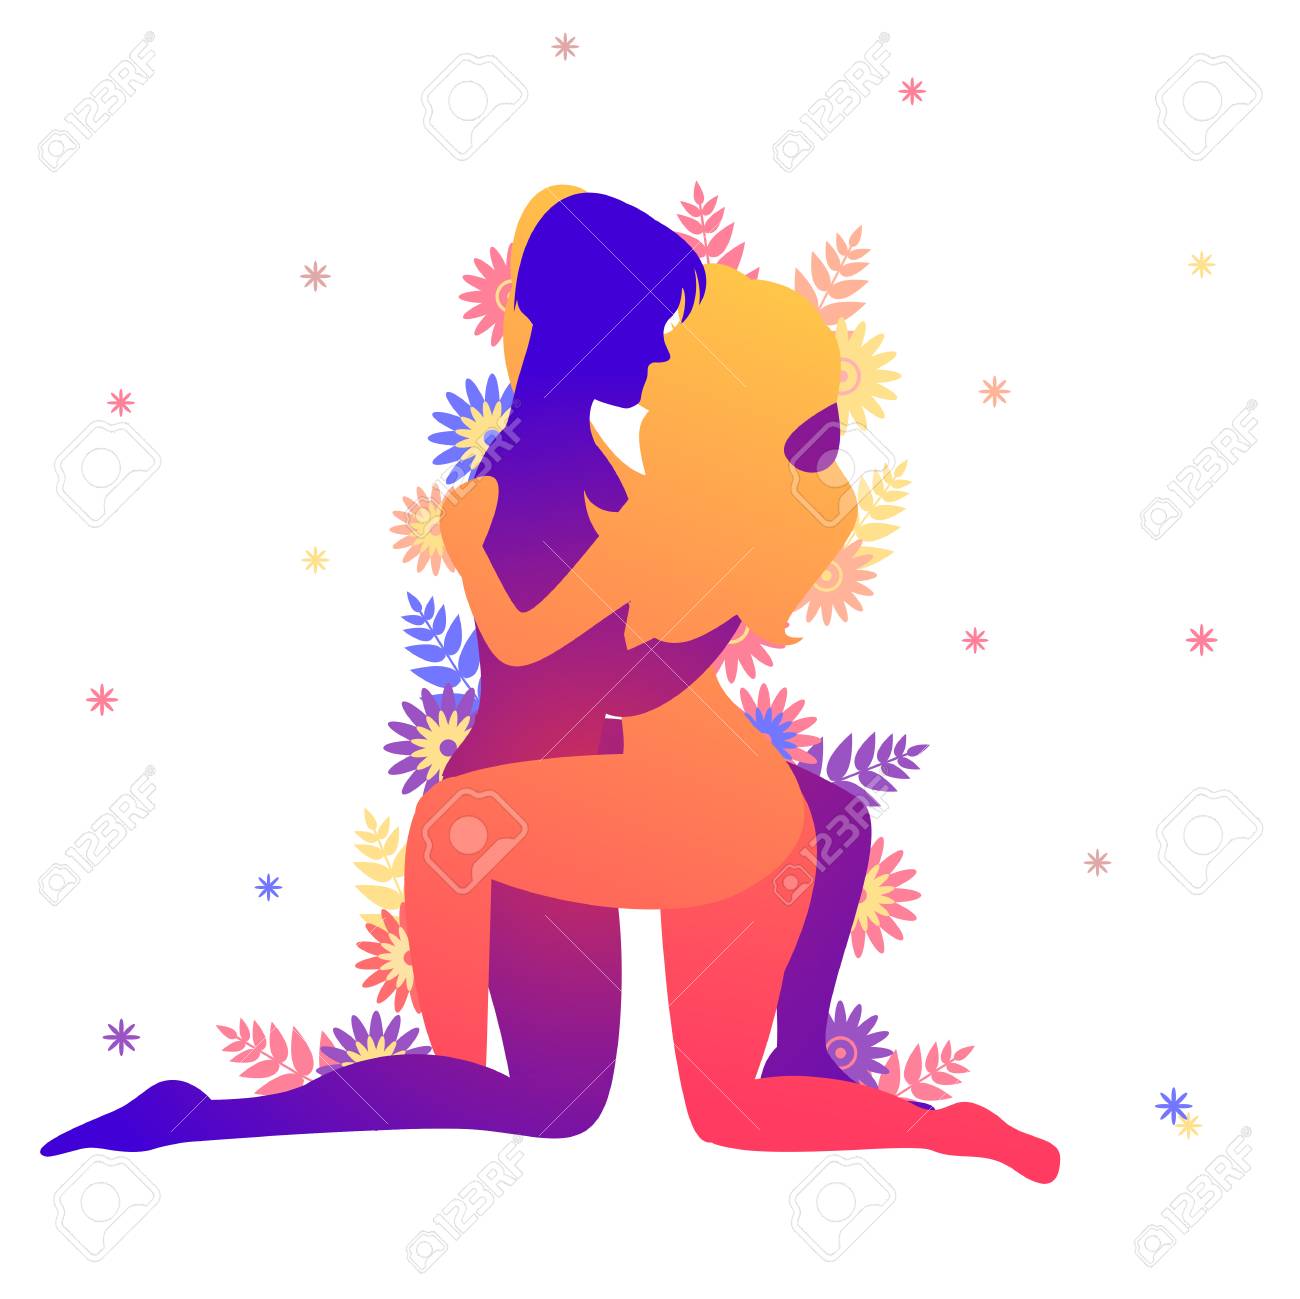 Cartoon kama sutra sex position illustration